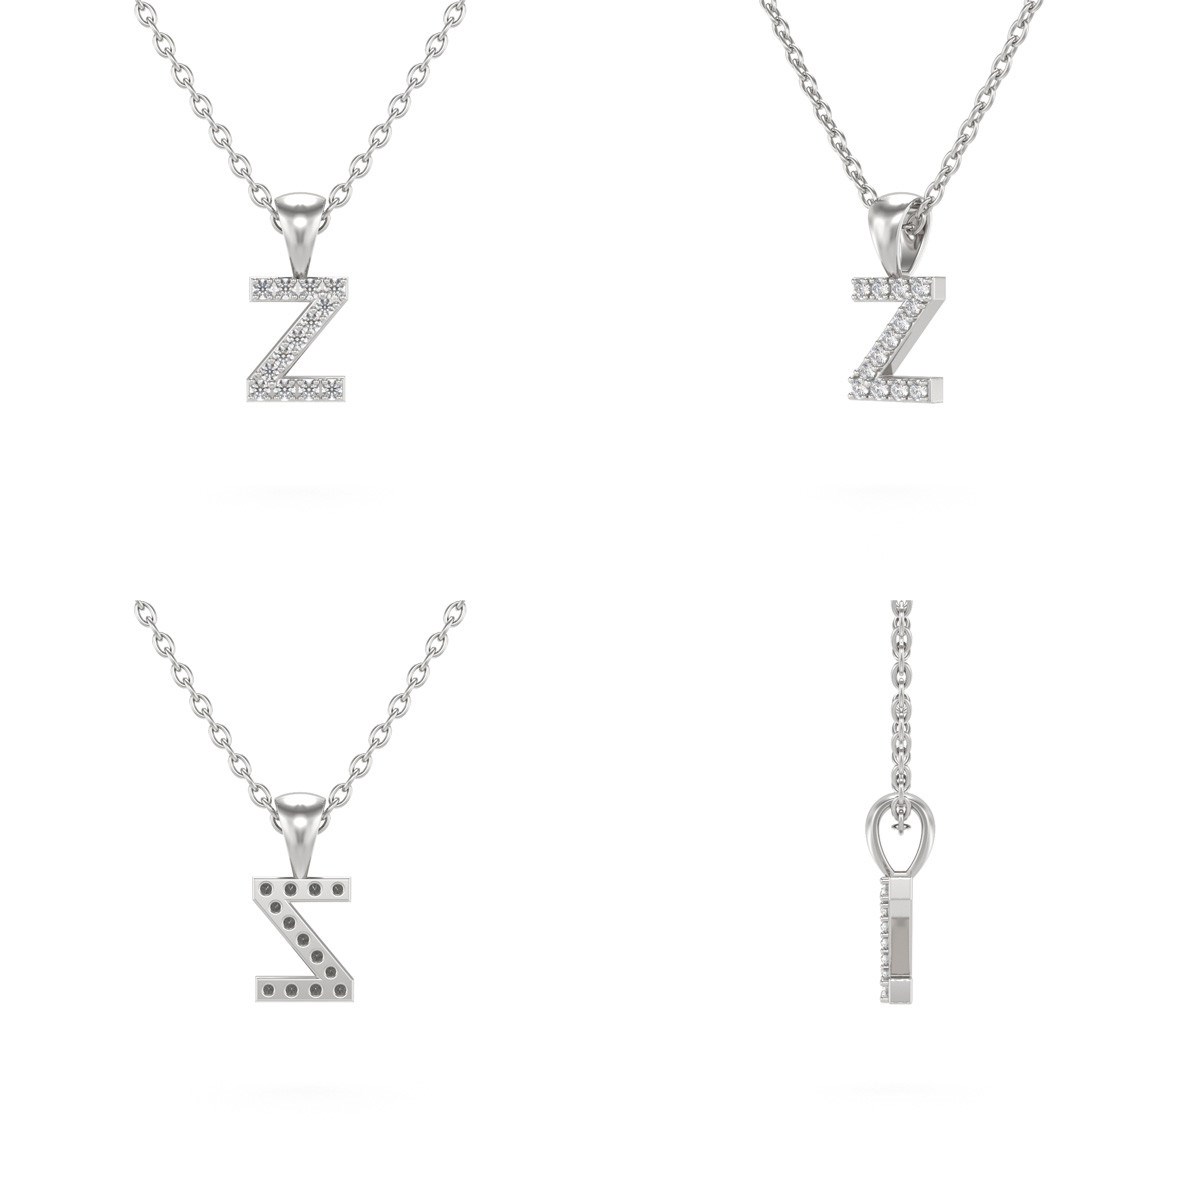 Collier Pendentif ADEN Lettre Z Or 750 Blanc Diamant Chaine Or 750 incluse 0.72grs - vue 2